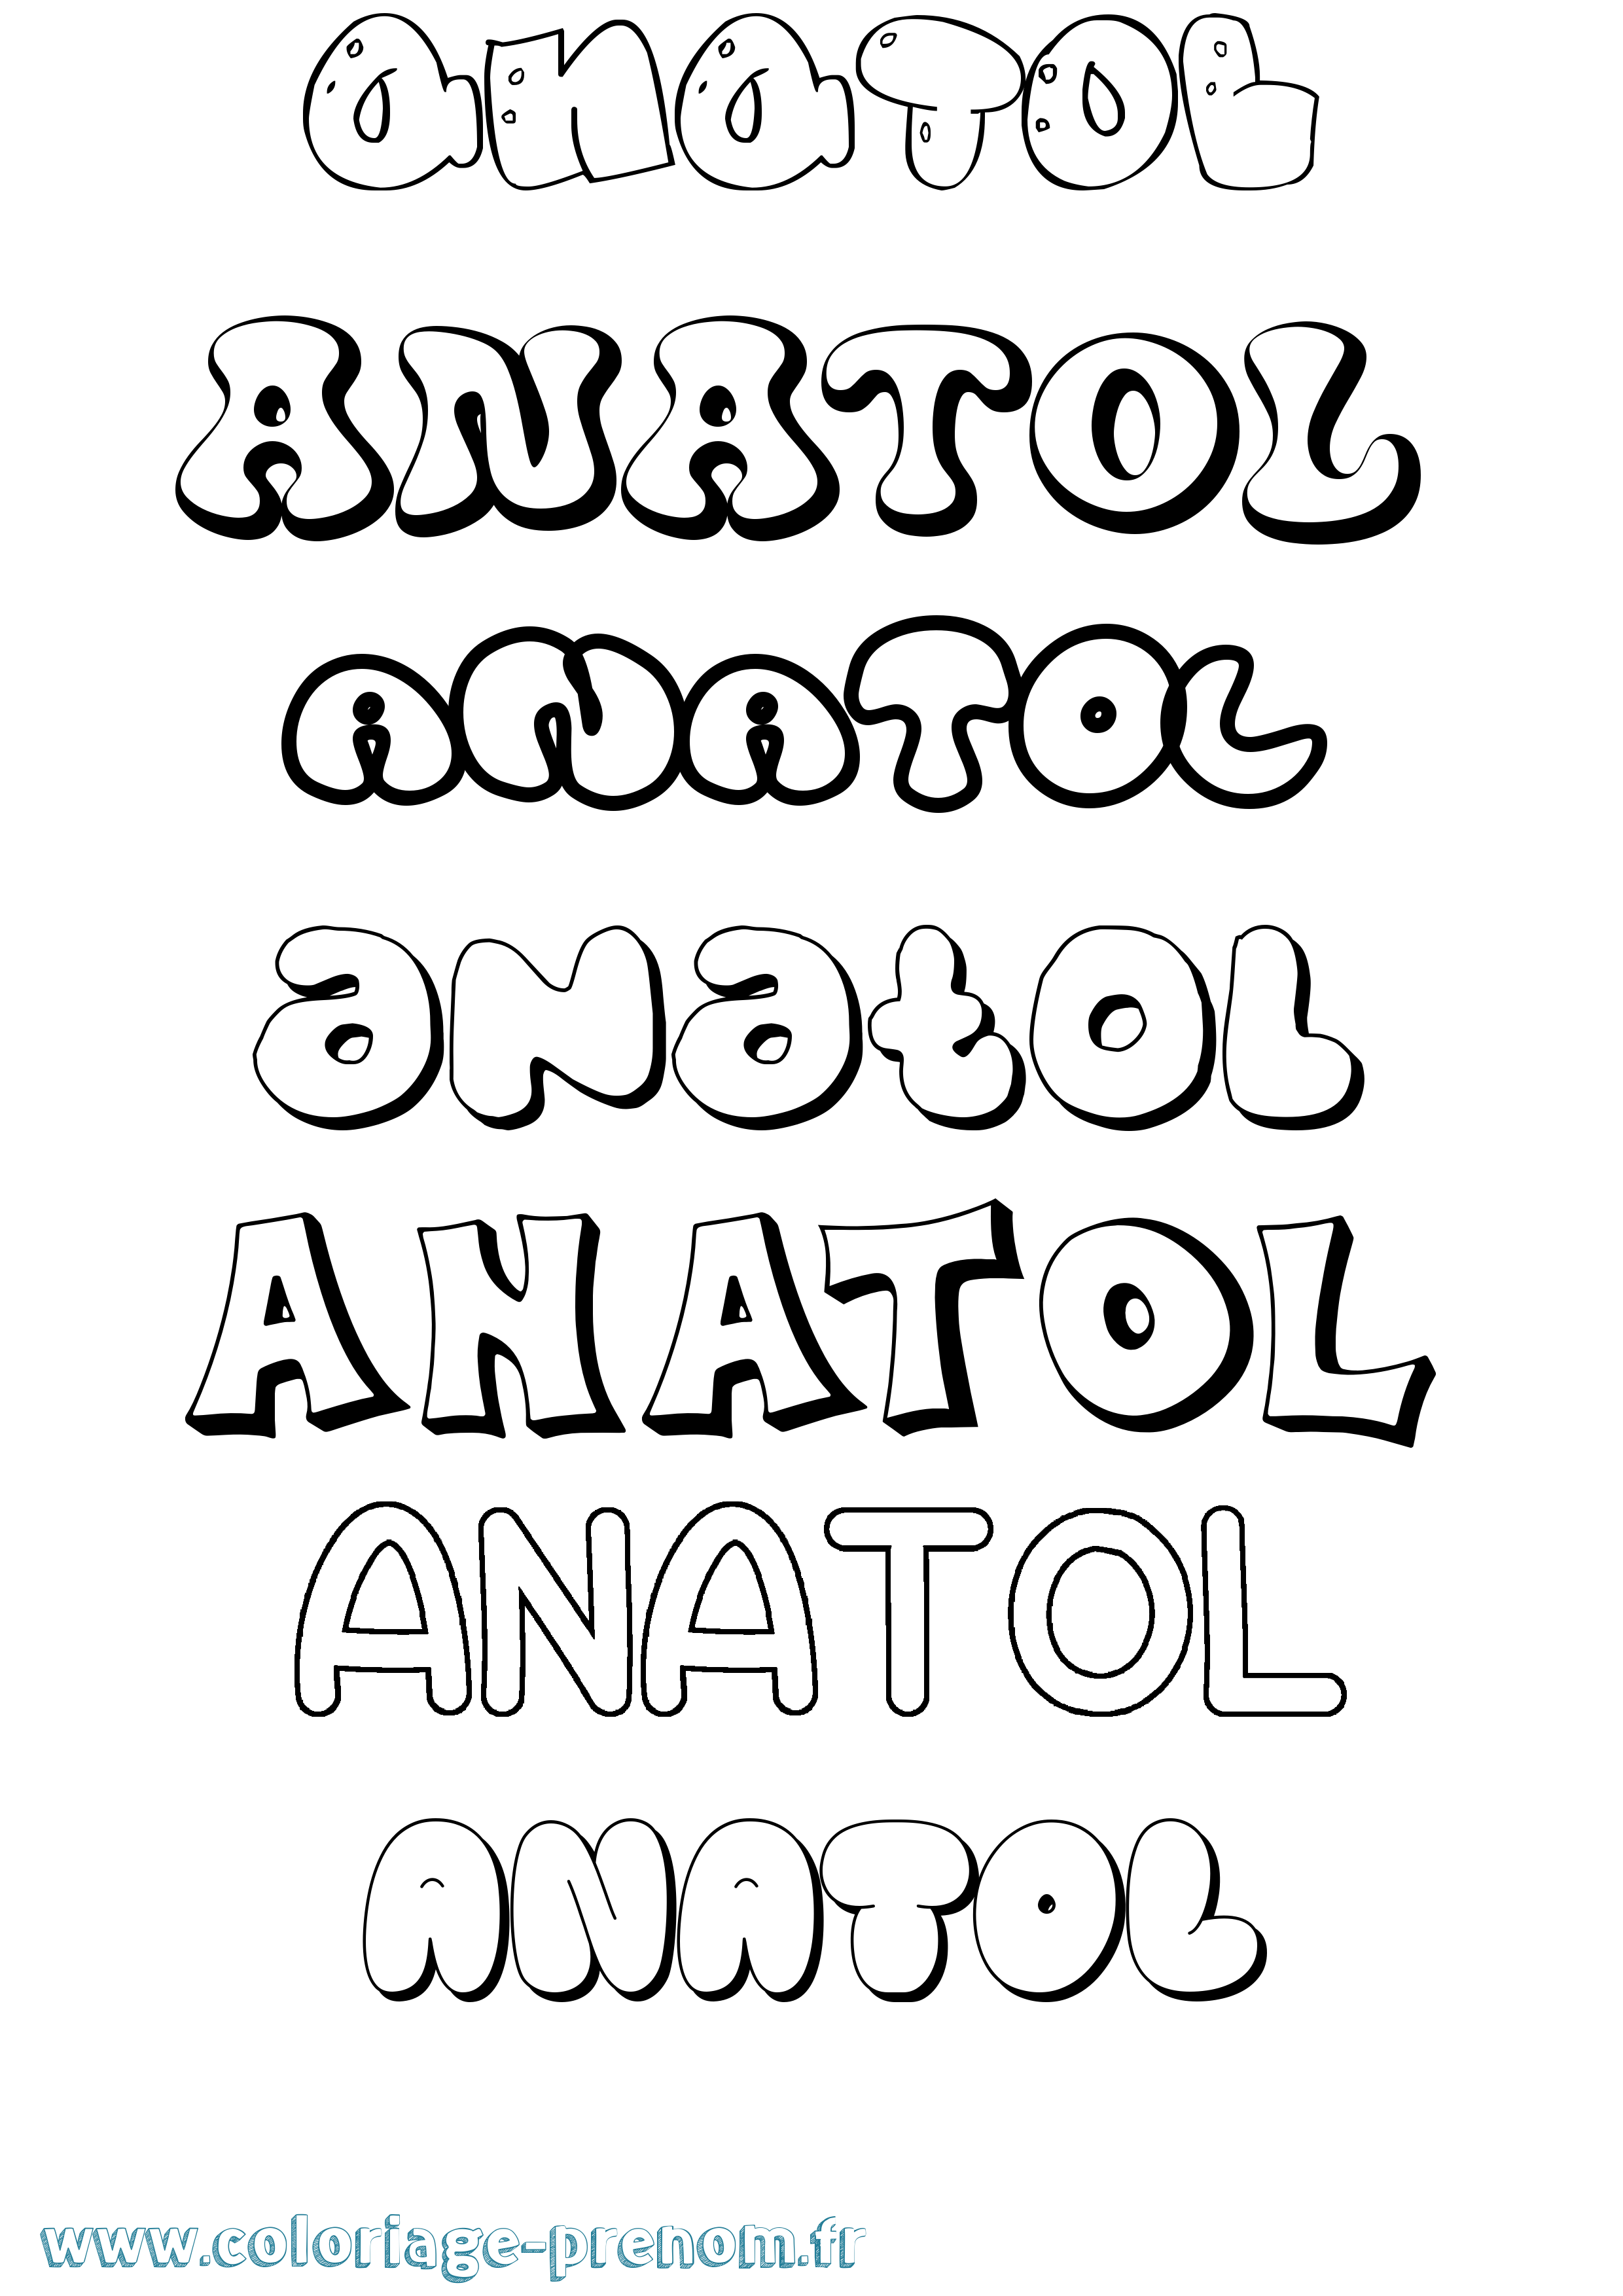 Coloriage prénom Anatol Bubble